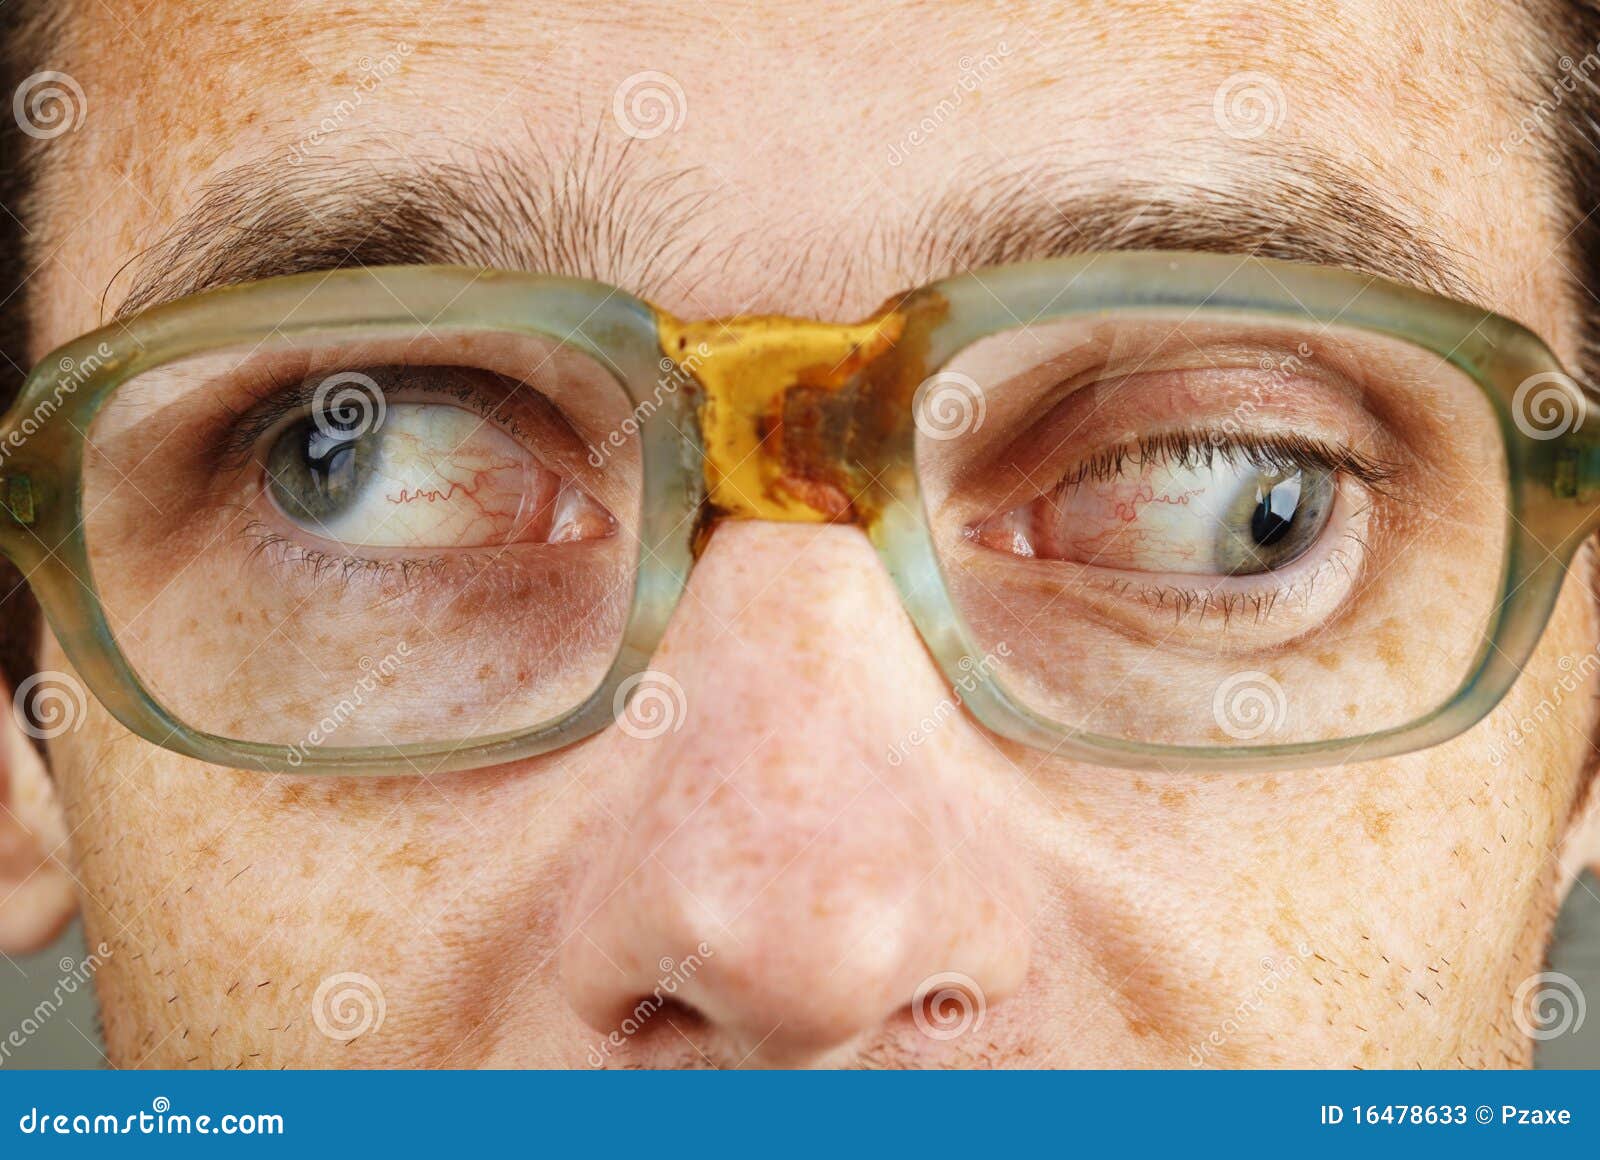 strabismus - eye closeup